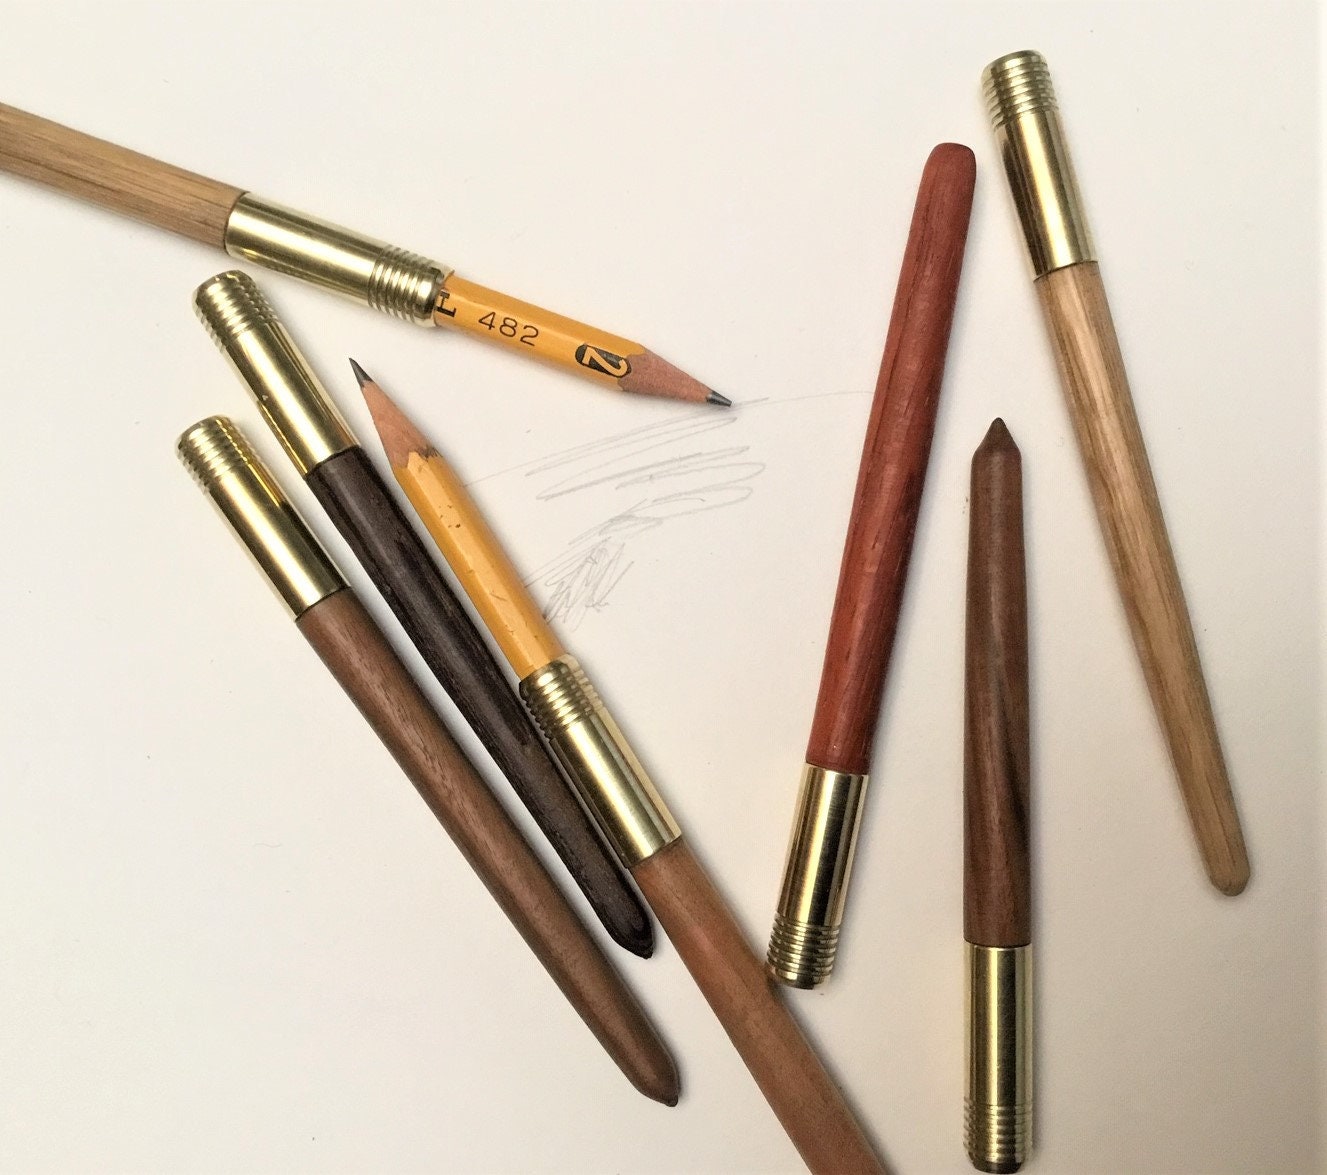 Pencil Holder, Pencil Extender, Pencil Lengthener pencil-companion Diamond  Knurling 